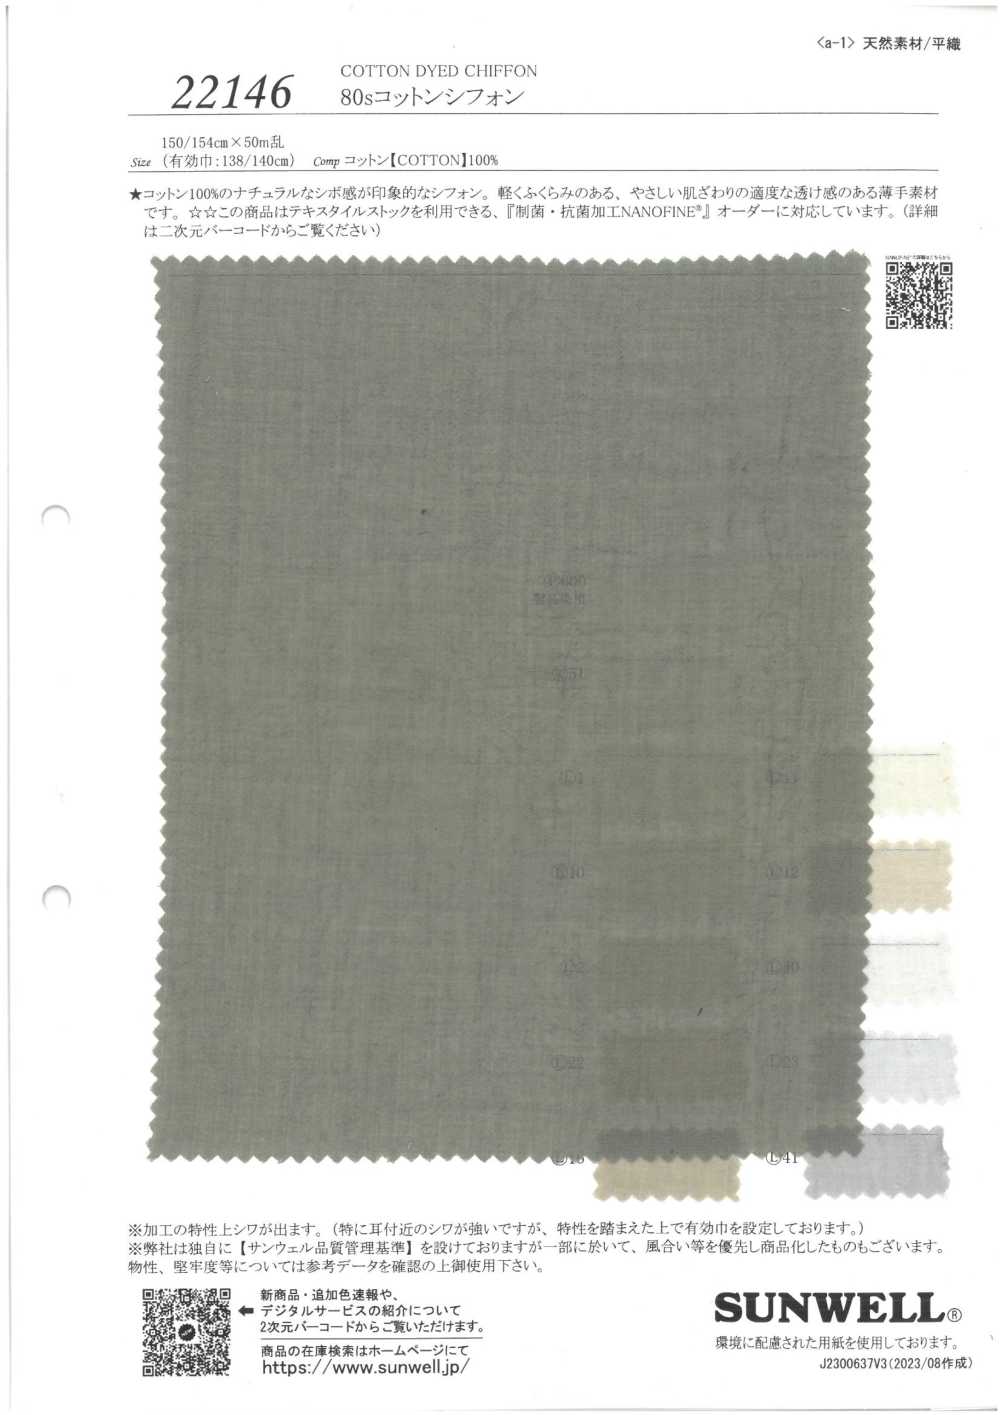 22146 80 Einfädiger Baumwoll-Chiffon[Textilgewebe] SUNWELL